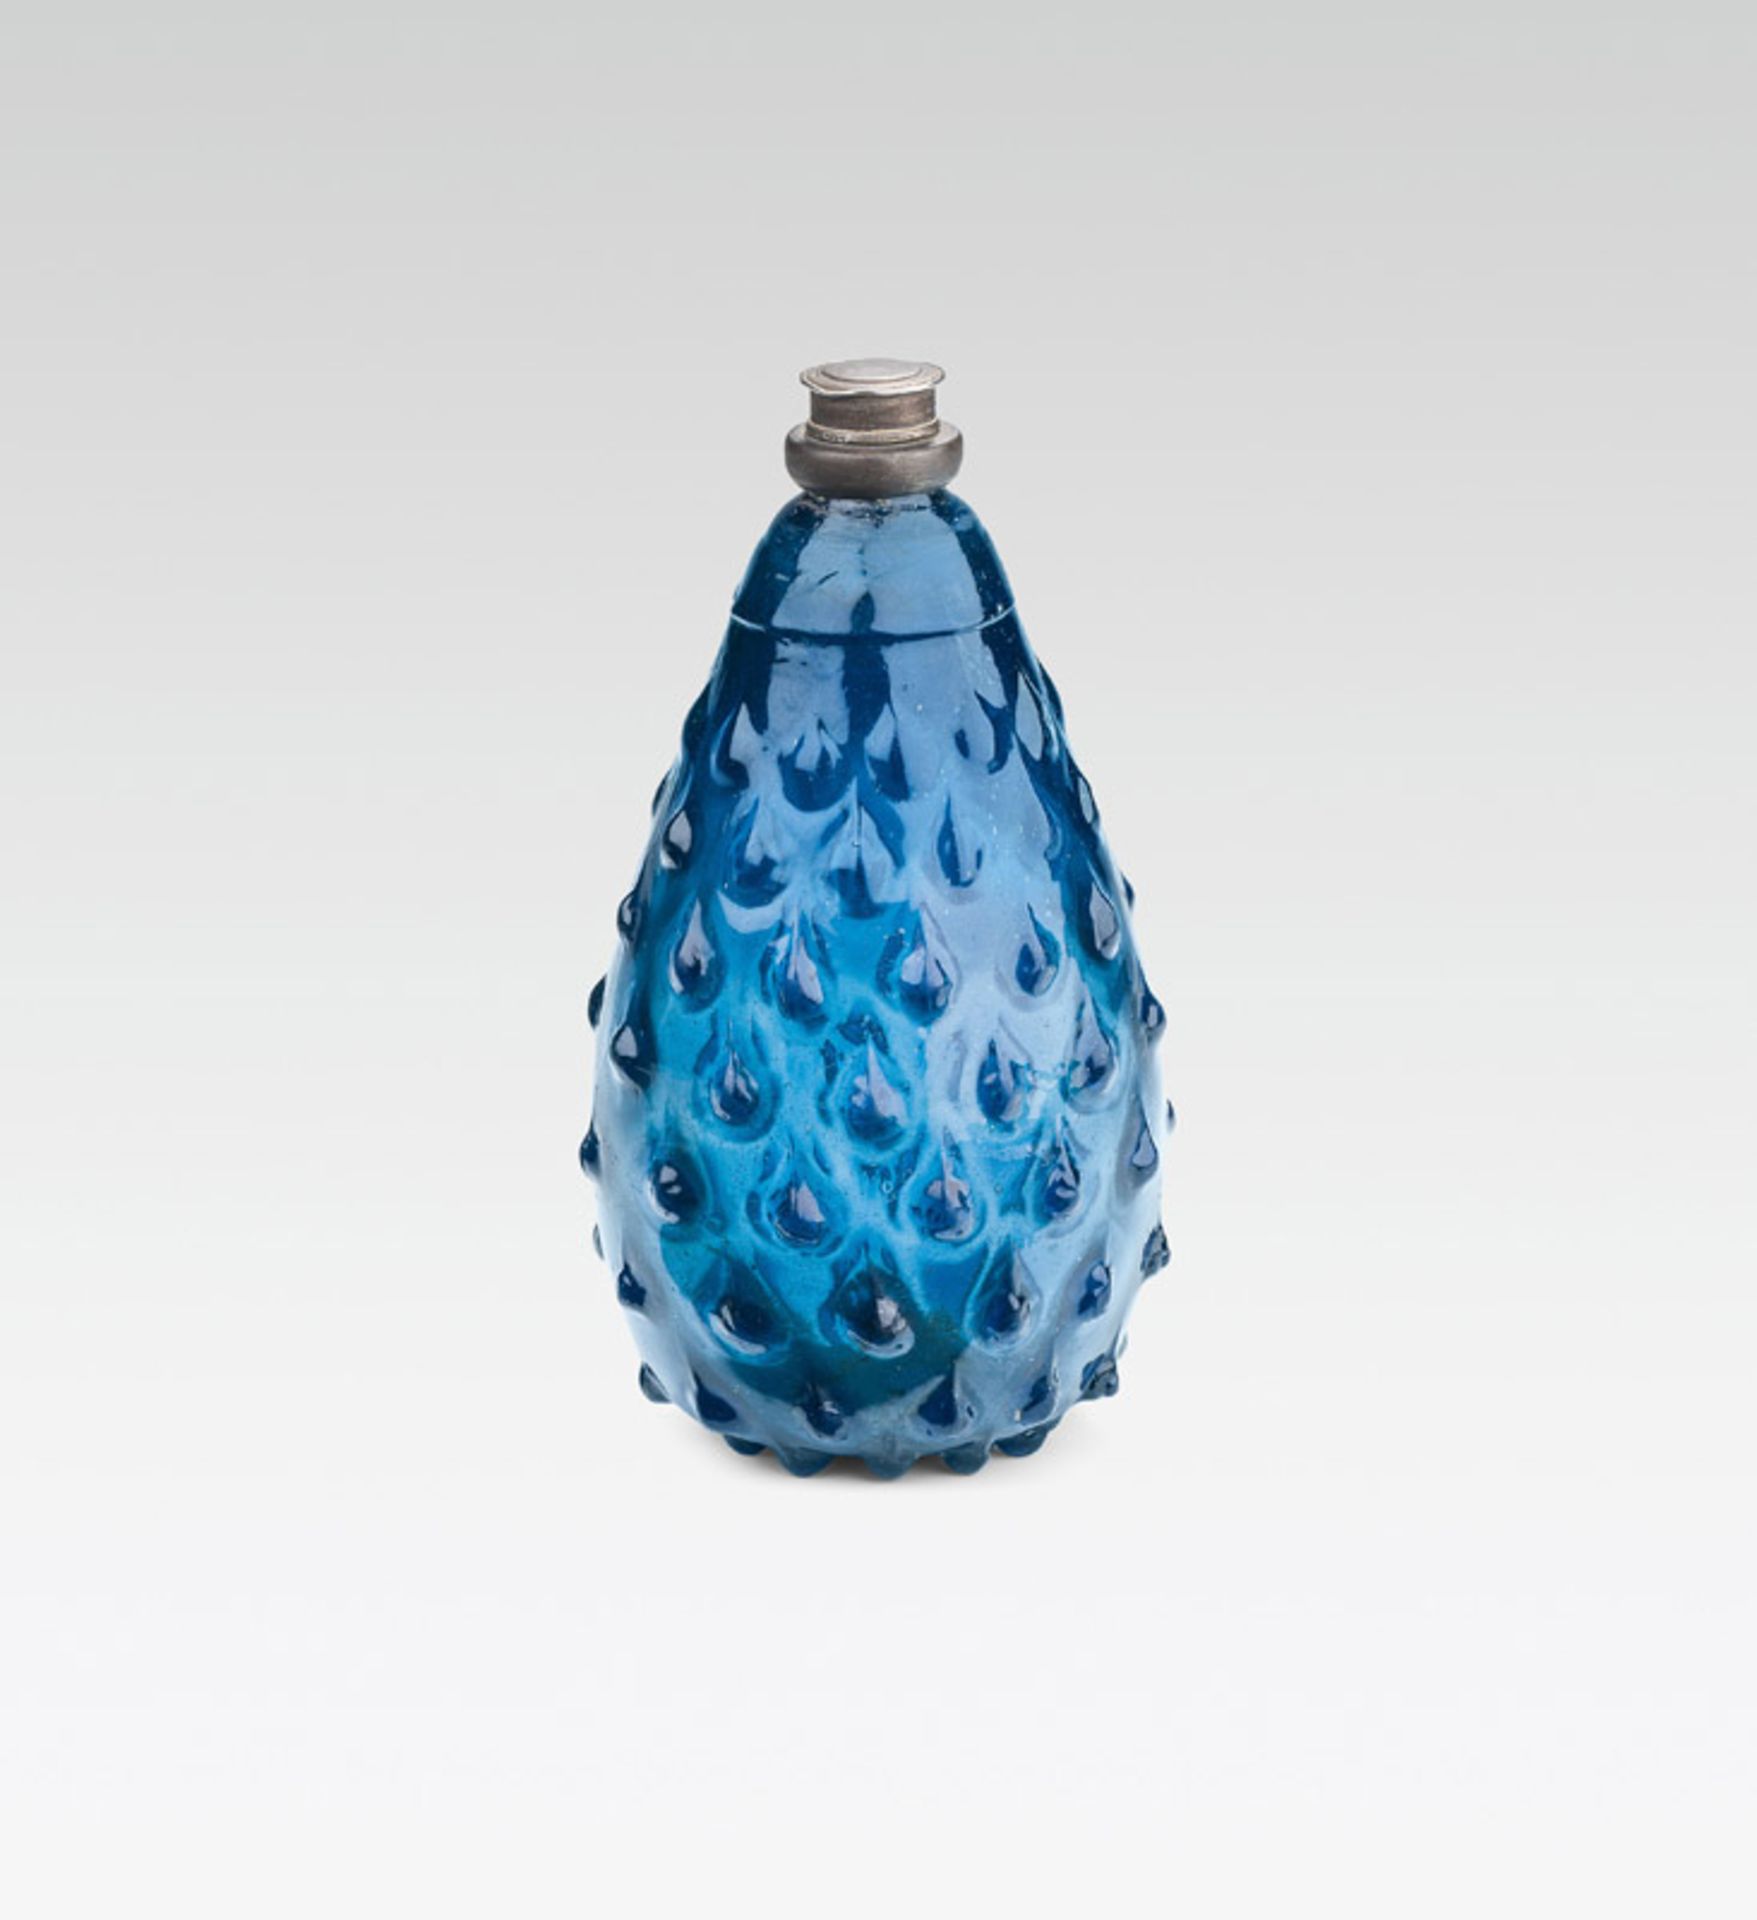 Blue bottle, Kramsach, c. 1700